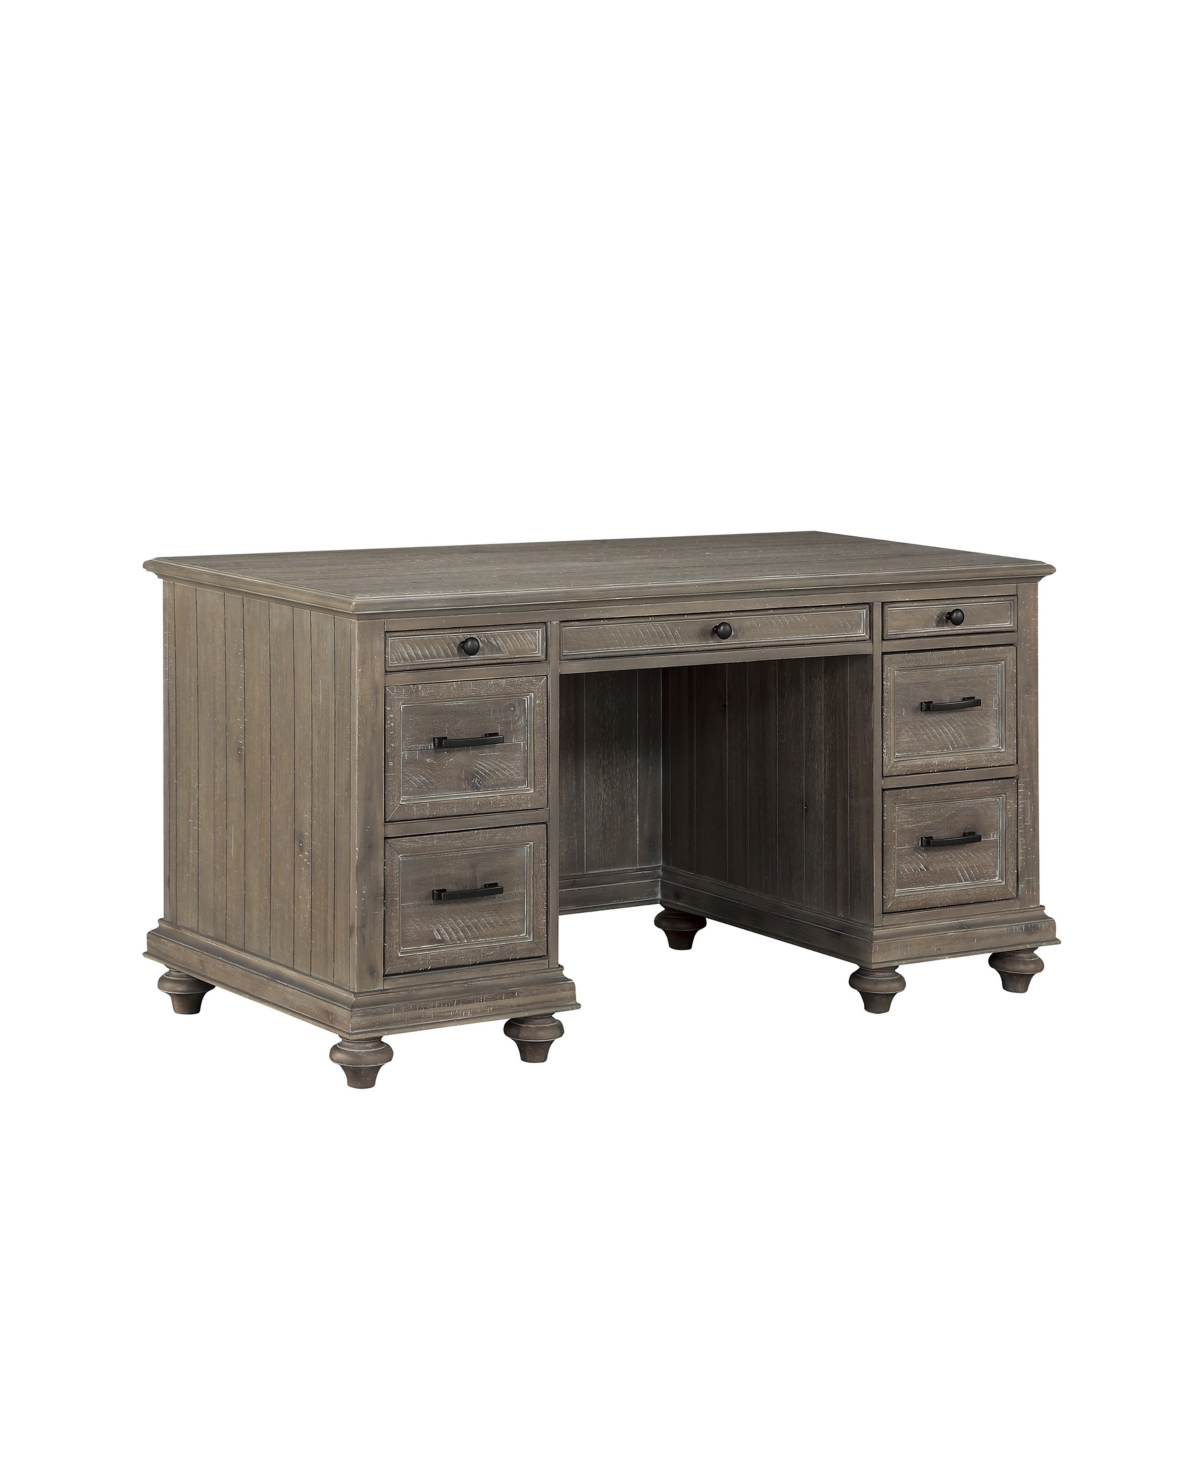 Furniture Seldovia Executive Desk In Driftwood Light Brown